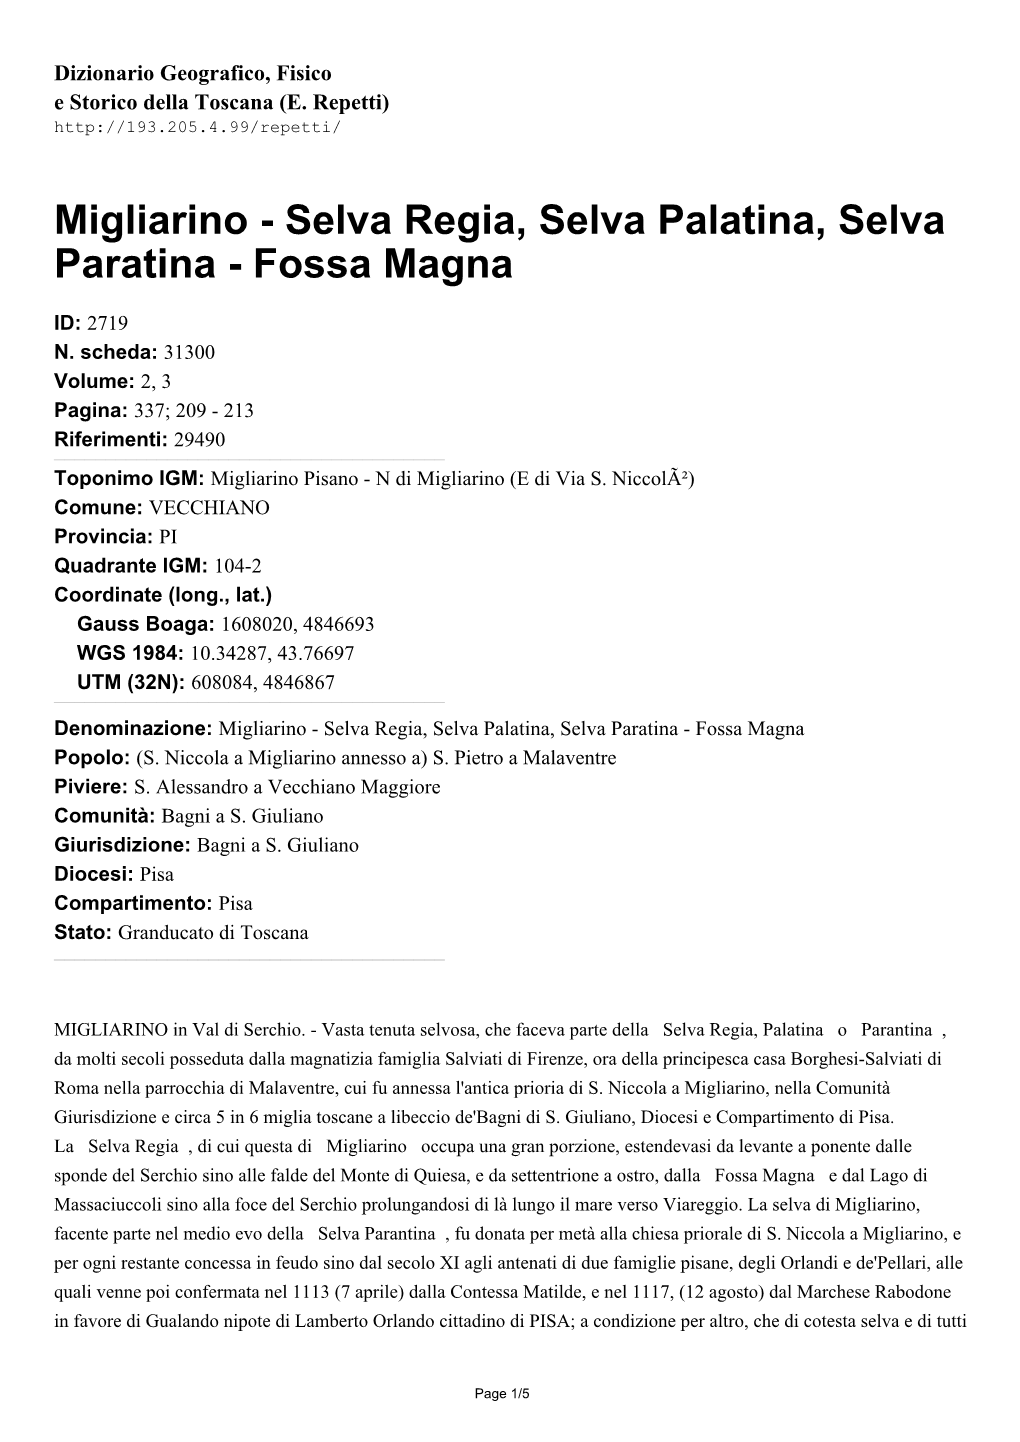 Migliarino - Selva Regia, Selva Palatina, Selva Paratina - Fossa Magna